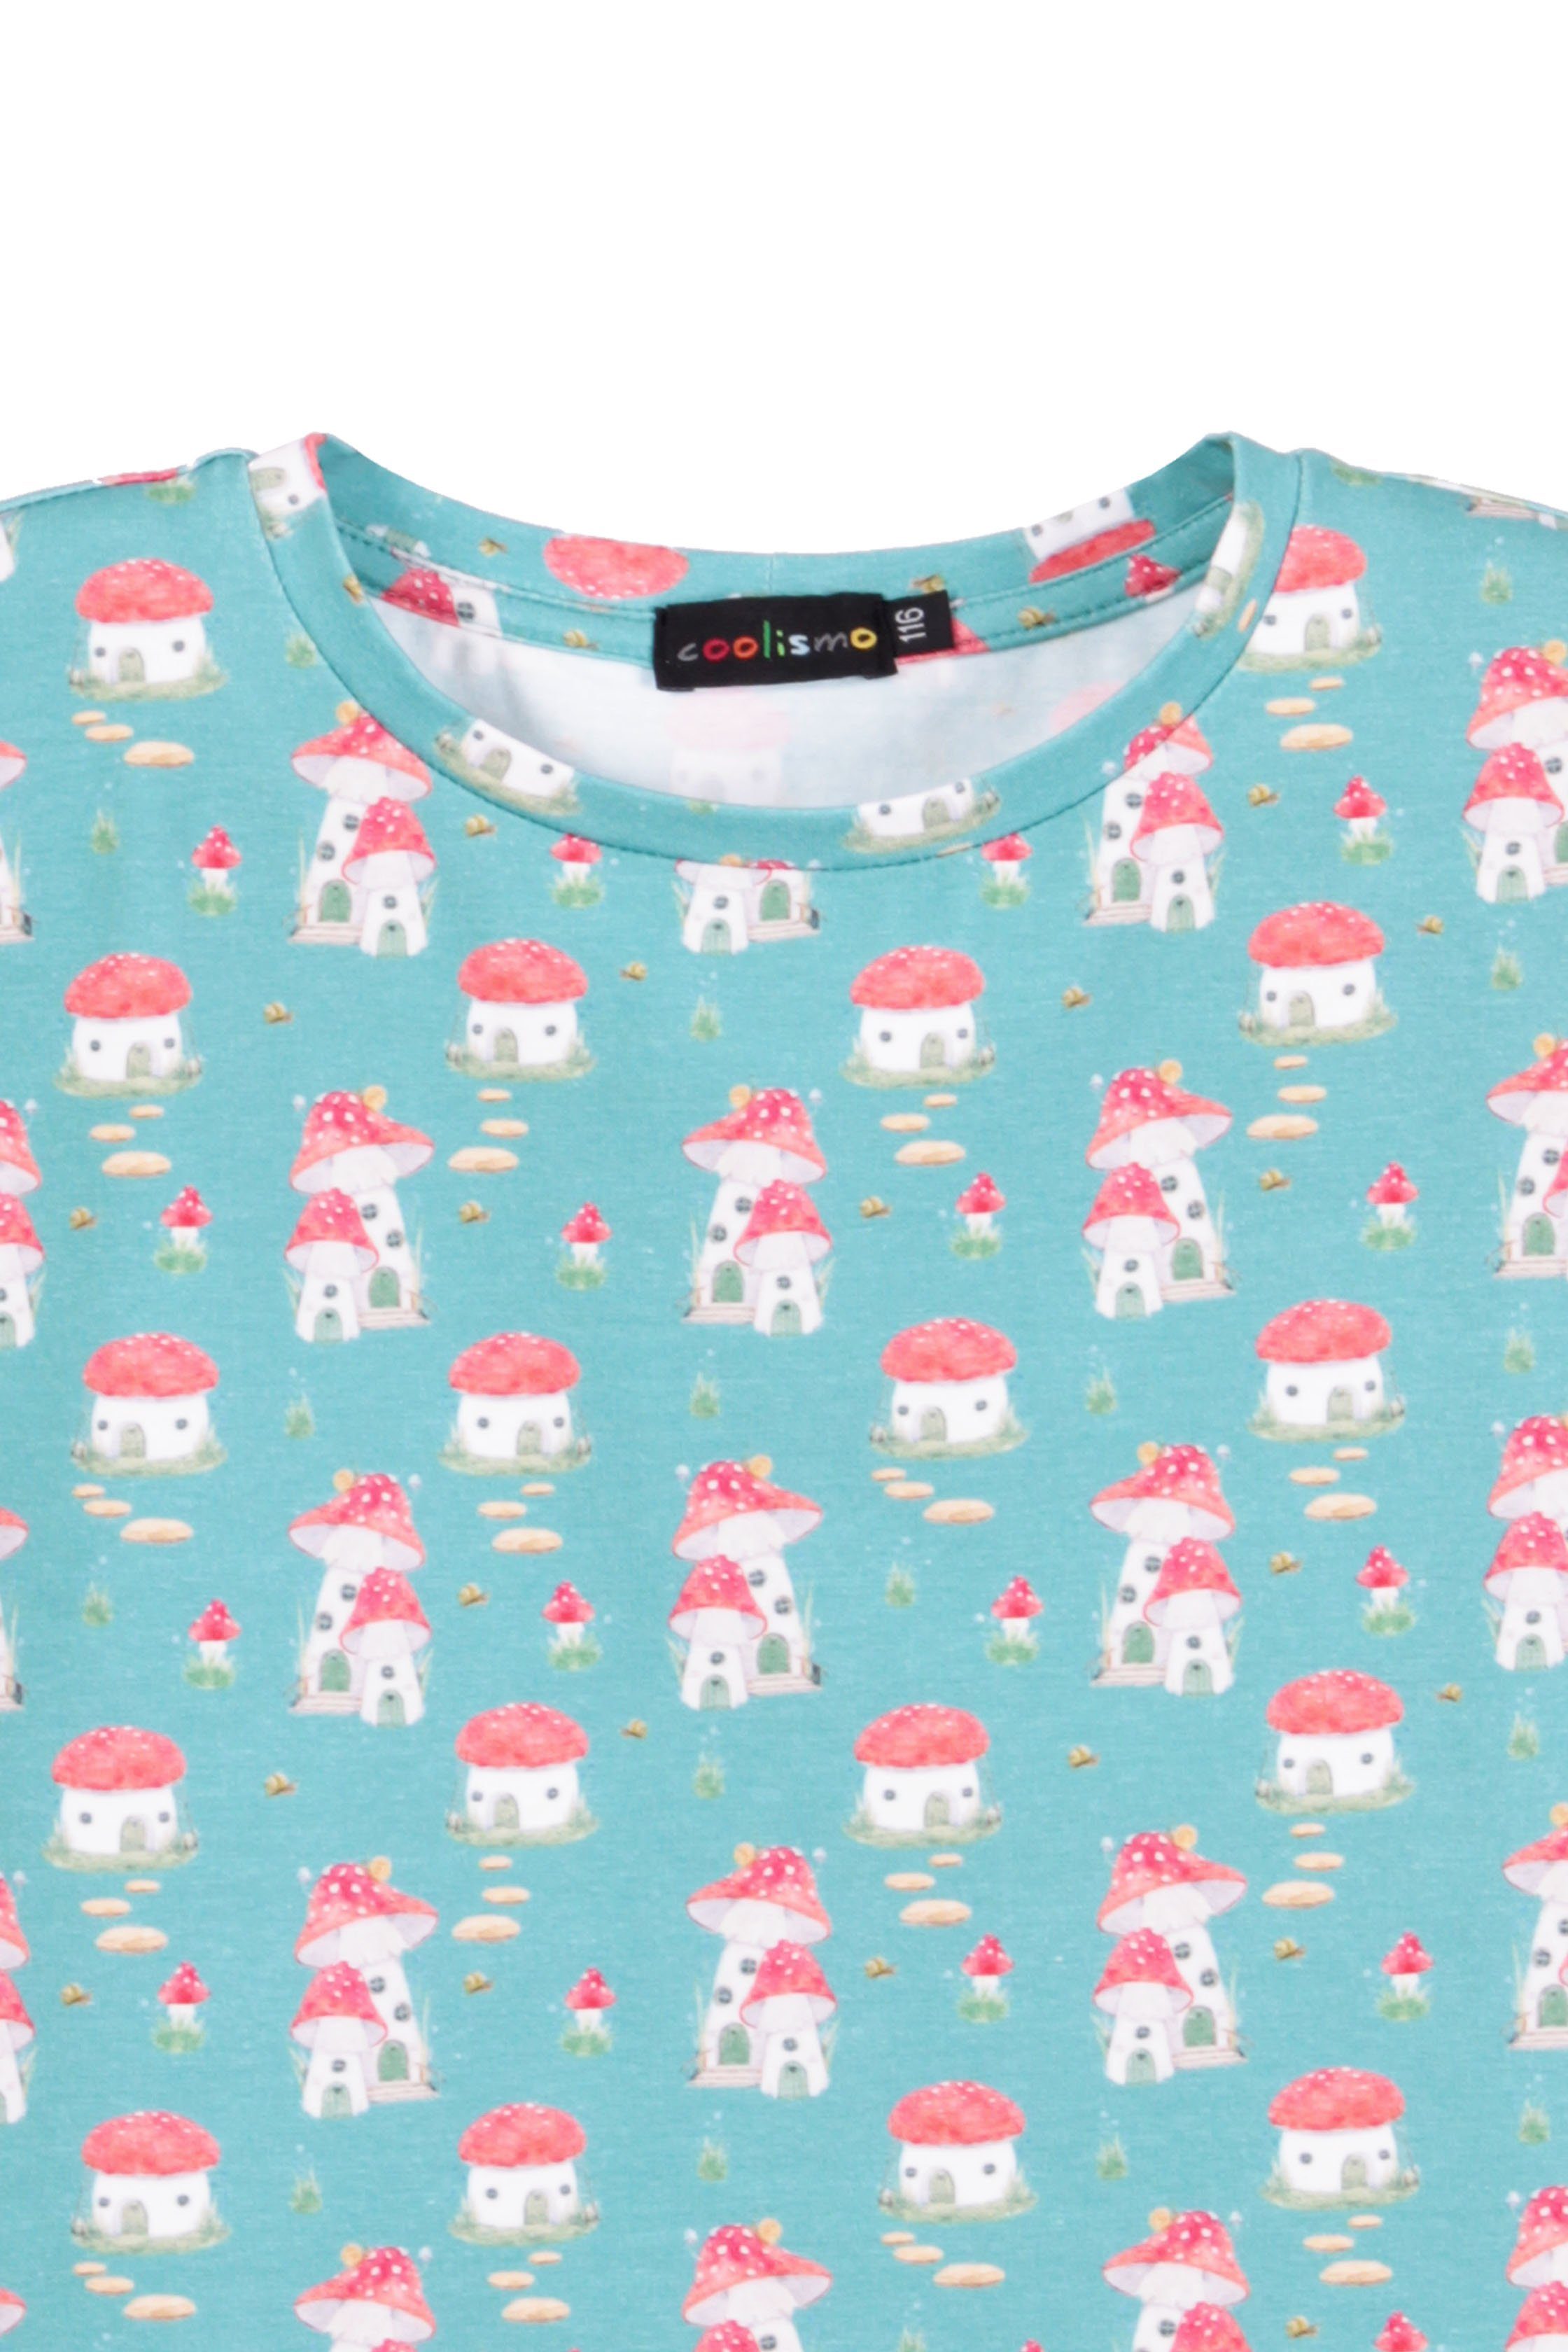 coolismo europäische Produktion Rundhalsauschnitt, Mädchen Pferdchen Pilz-Design Baumwolle, T-Shirt T-Shirt